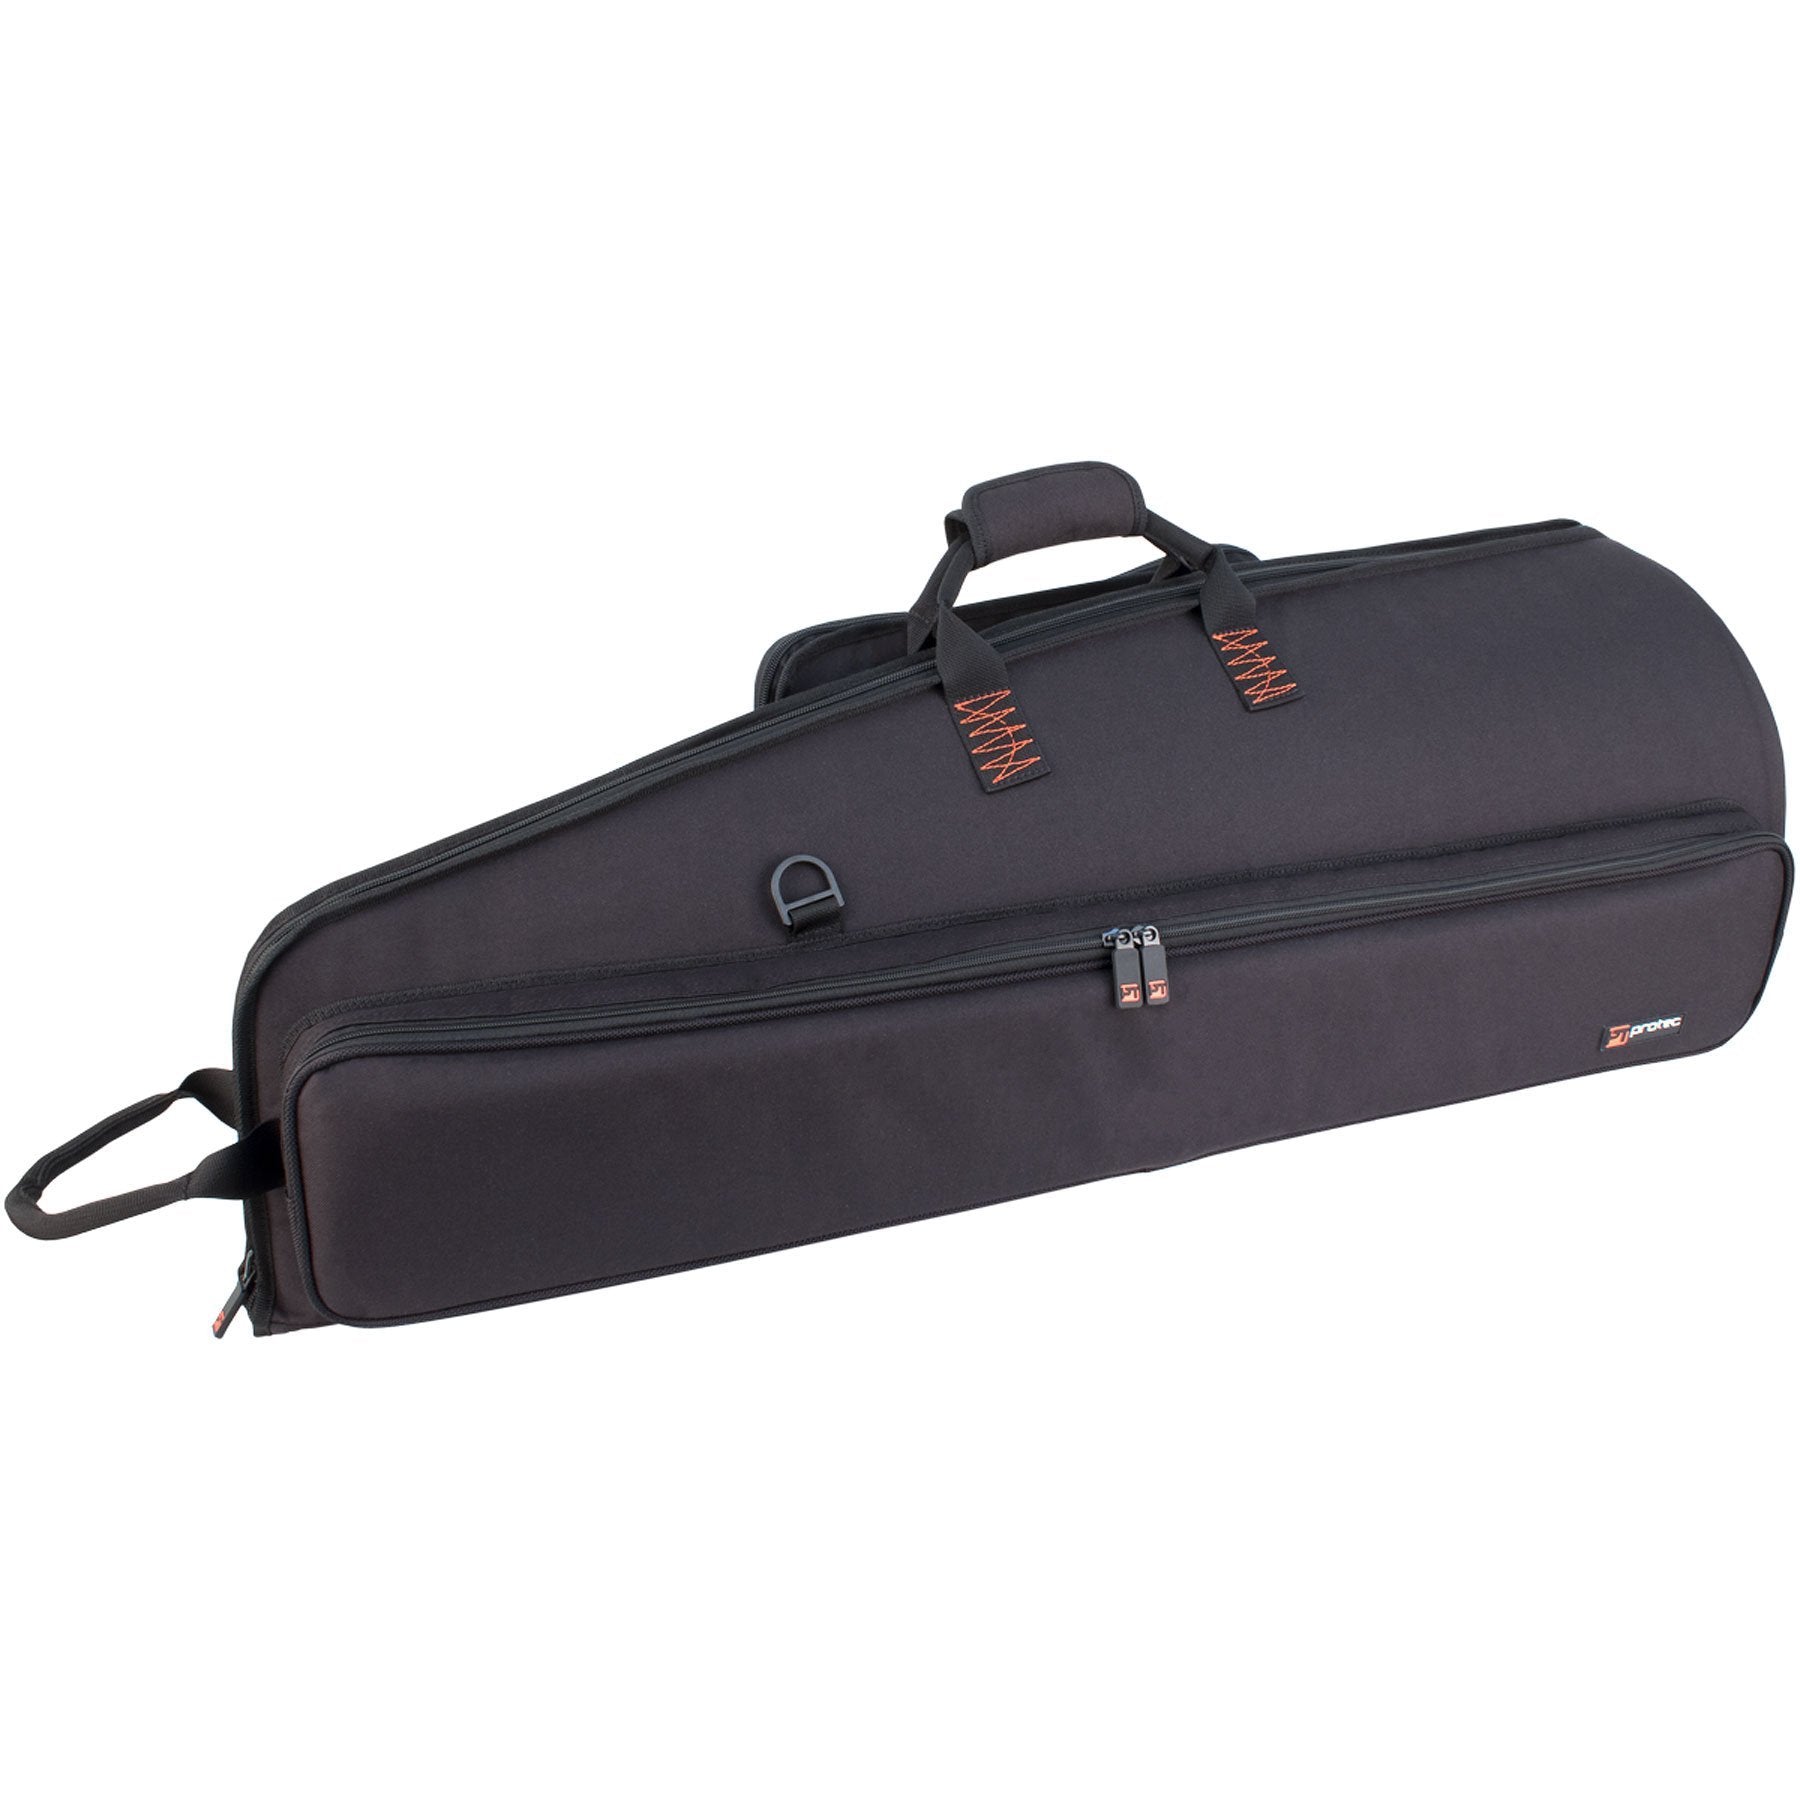 Protec - Bass Trombone Explorer Gig Bag with Sheet Music Pocket-Case-Protec-Music Elements